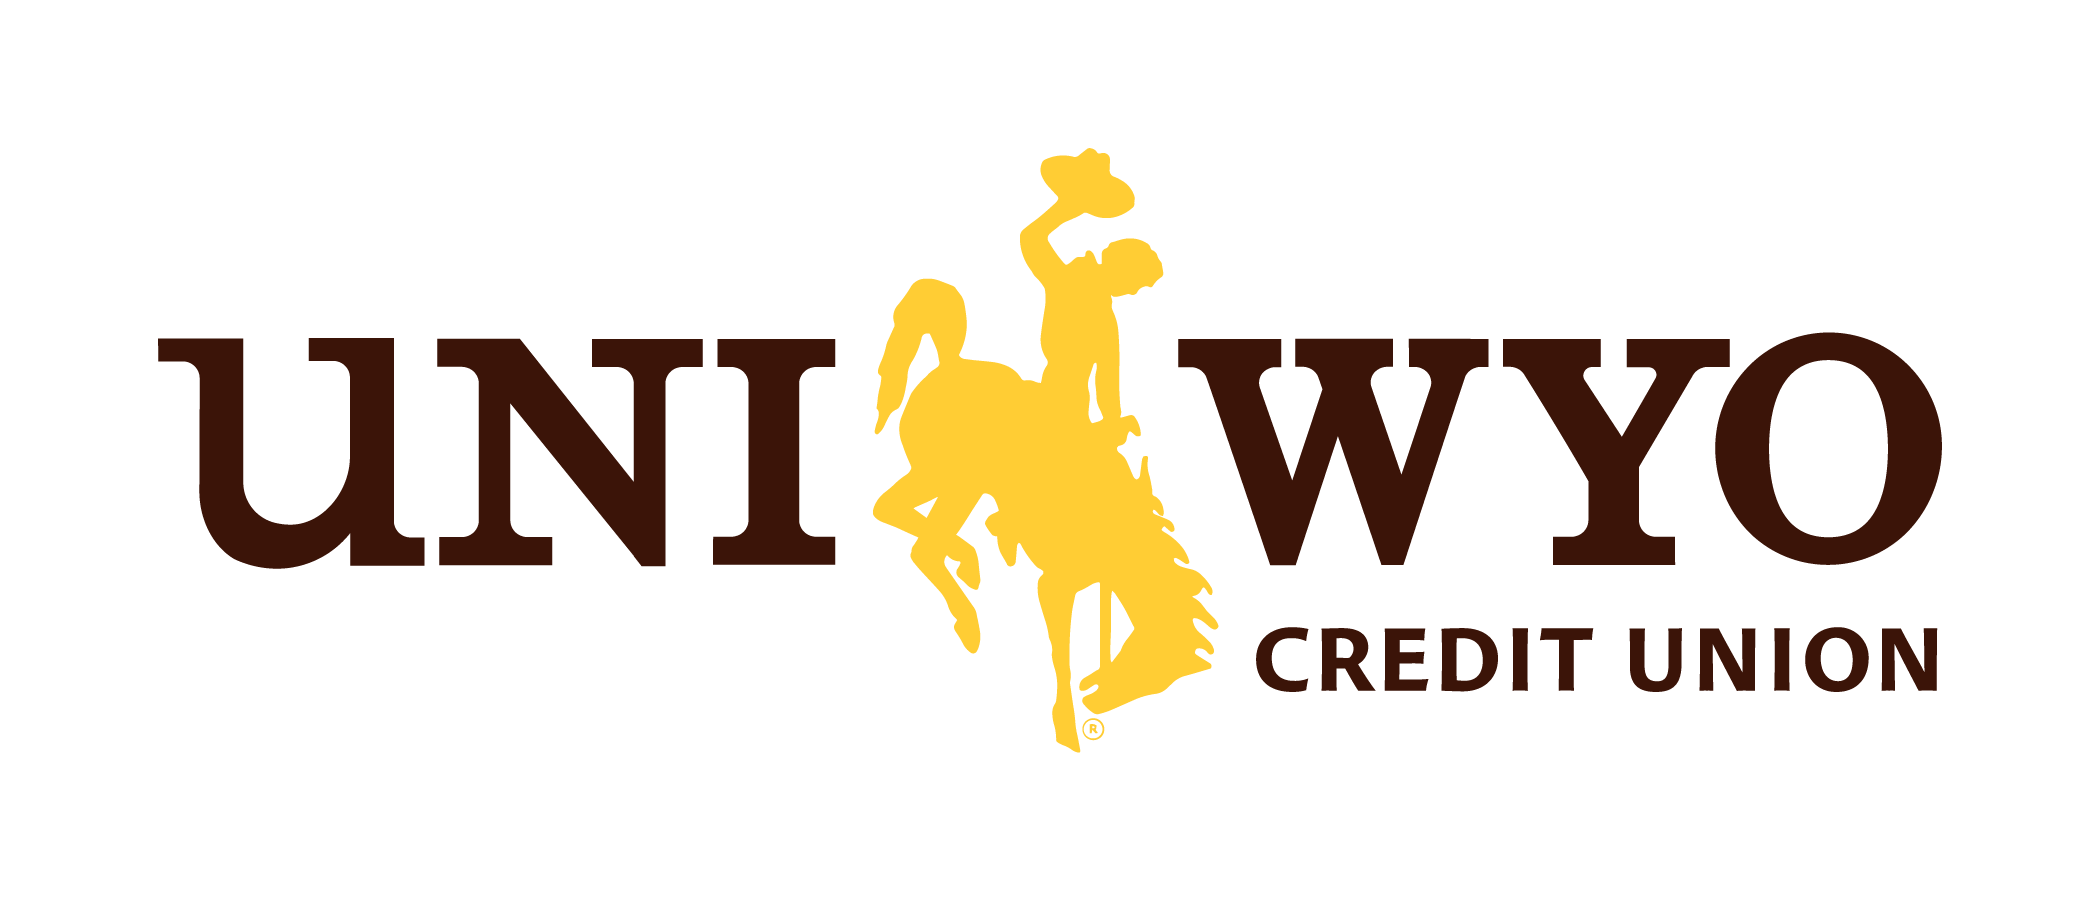 150 UniWyo Logo.png